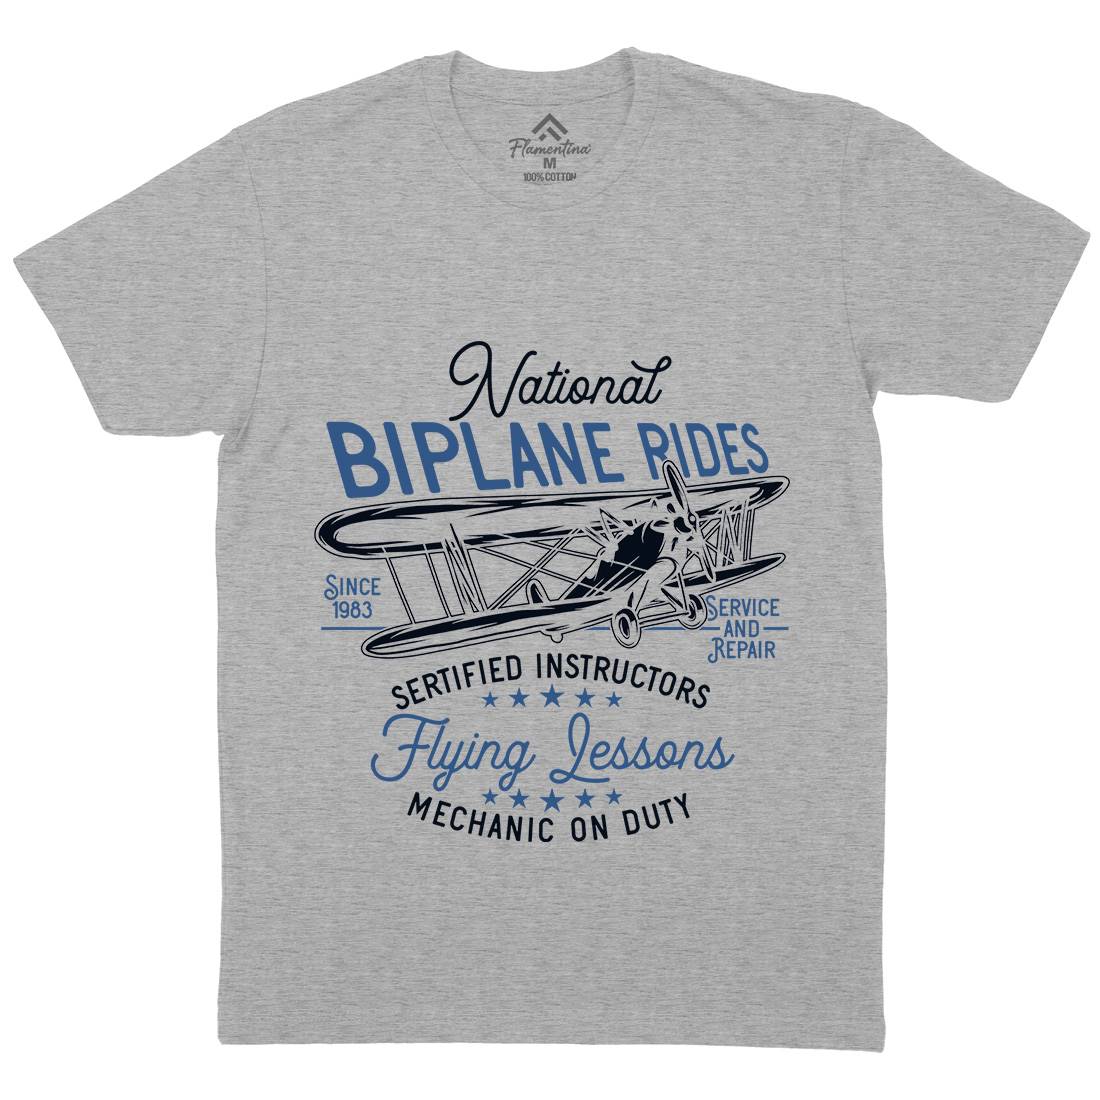 Biplane Rides Mens Crew Neck T-Shirt Vehicles D910